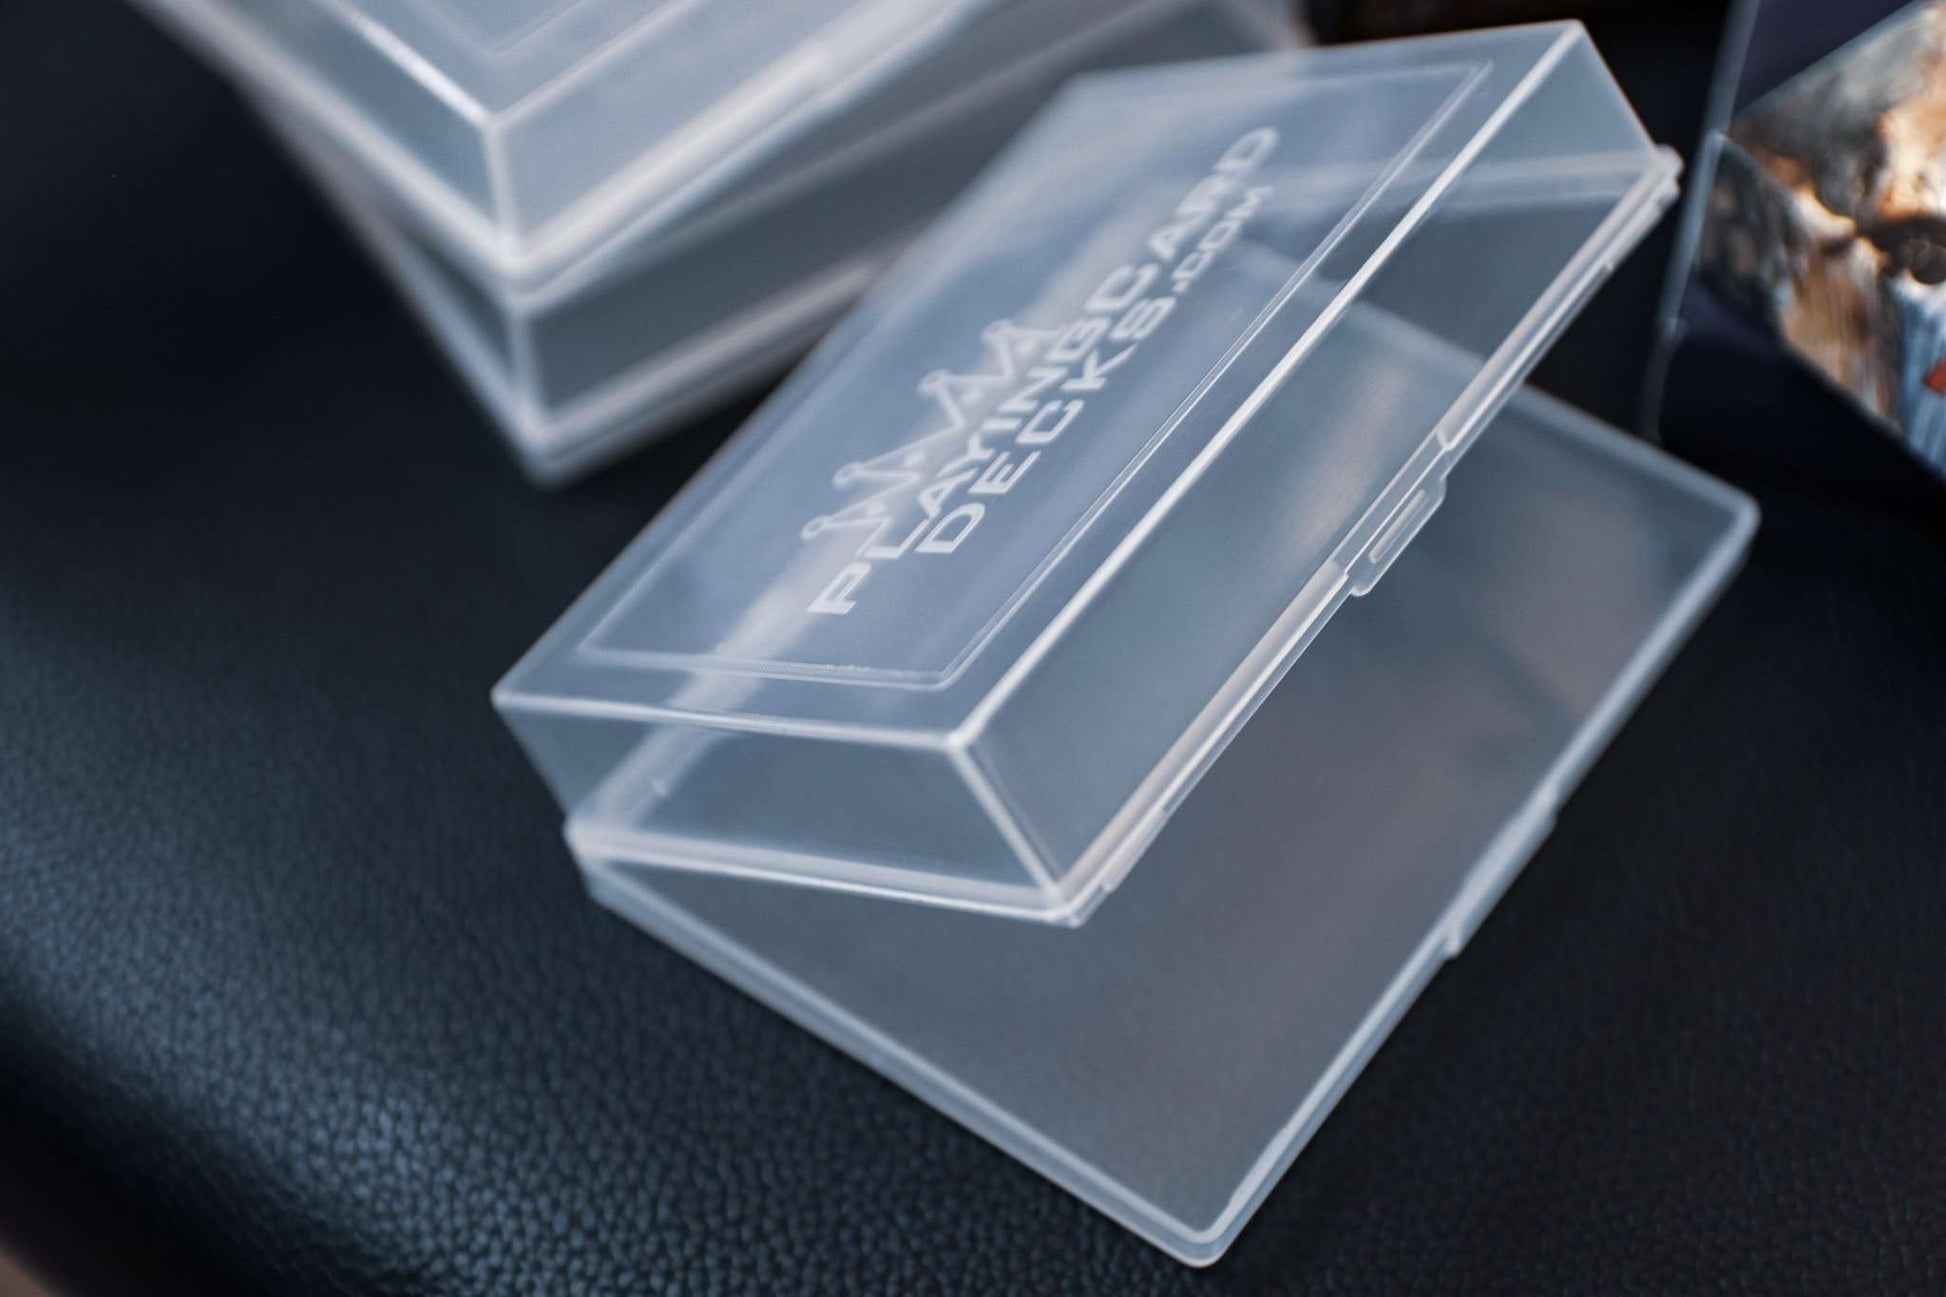 Plastic Playing Cards Storage Case Box - Custom Cards Box